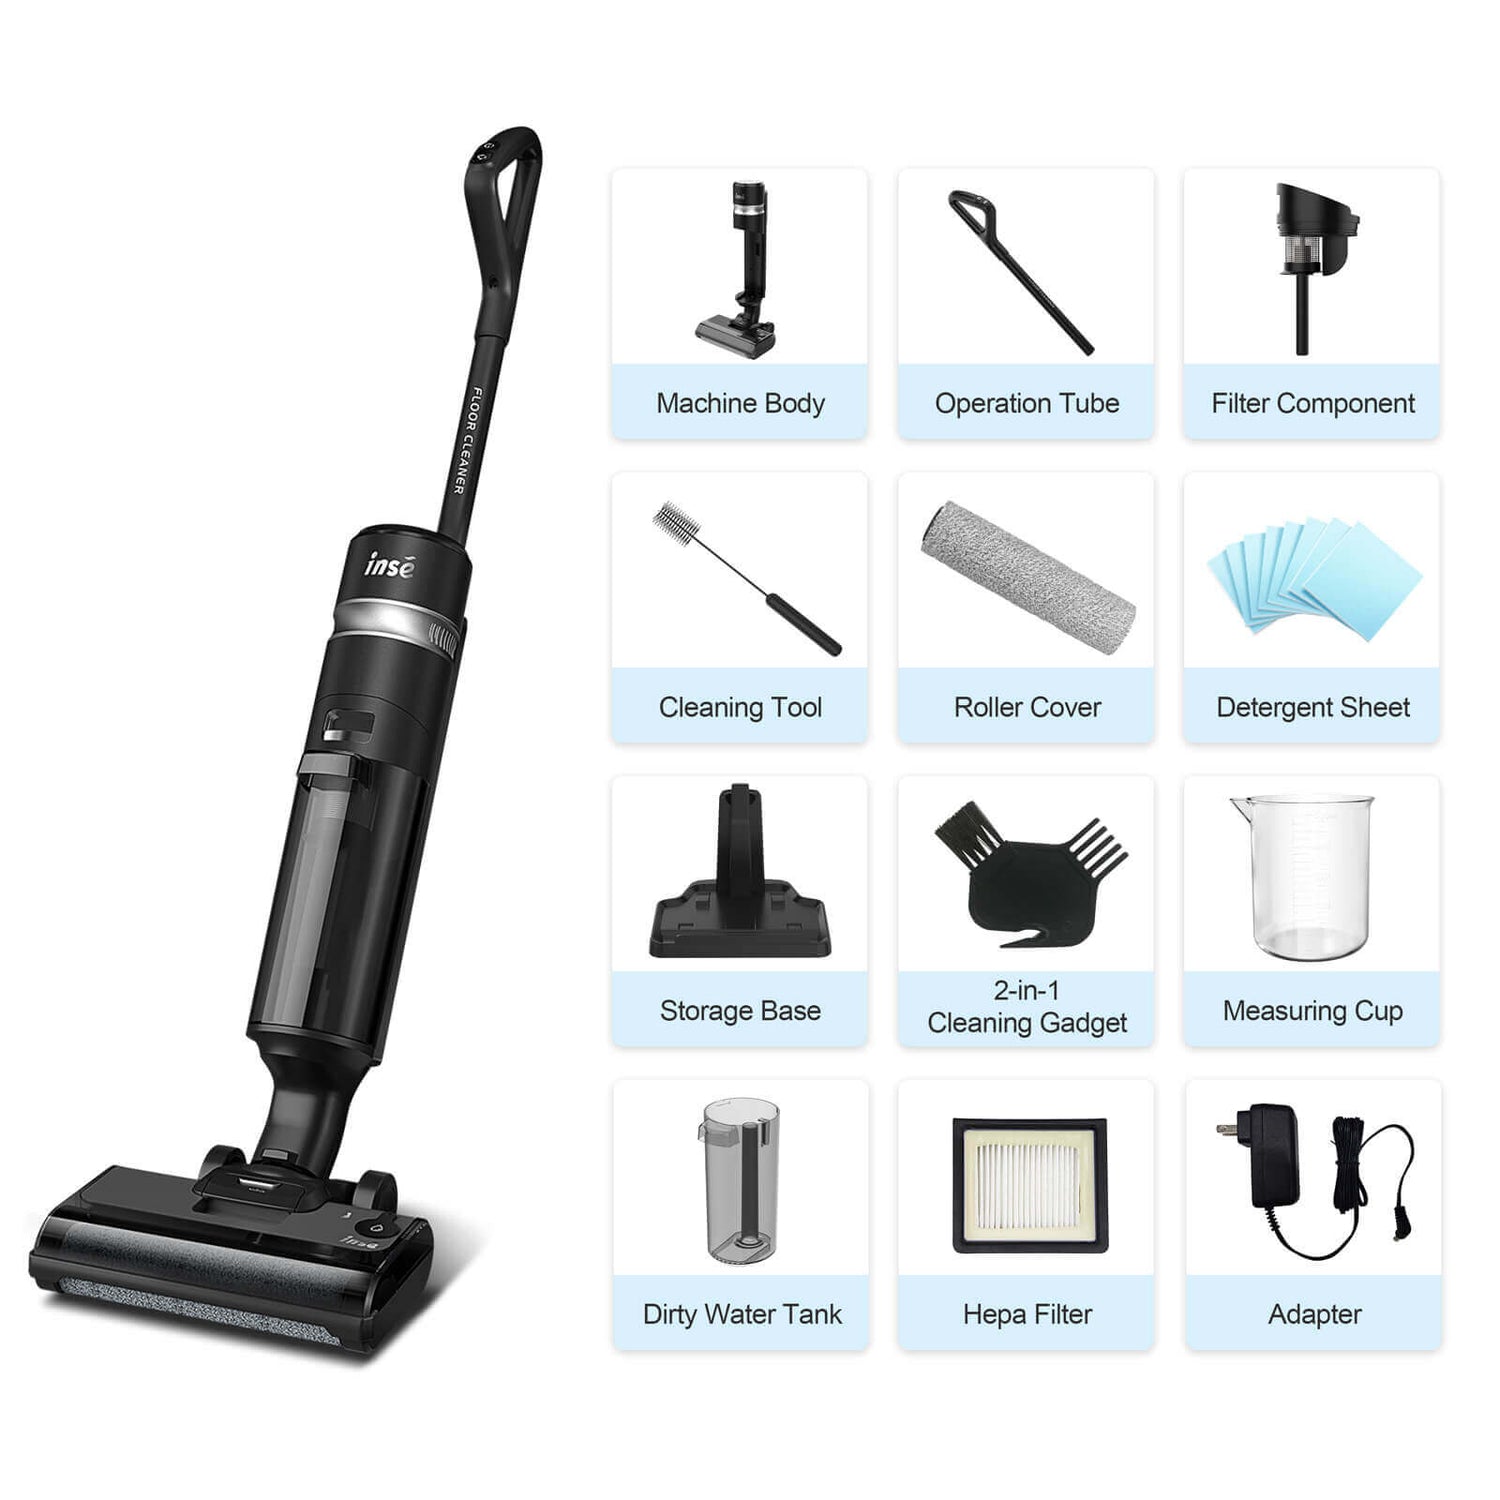 Tineco iFLOOR 3 Cordless Wet/Dry Vacuum Cleaner and Hard Floor